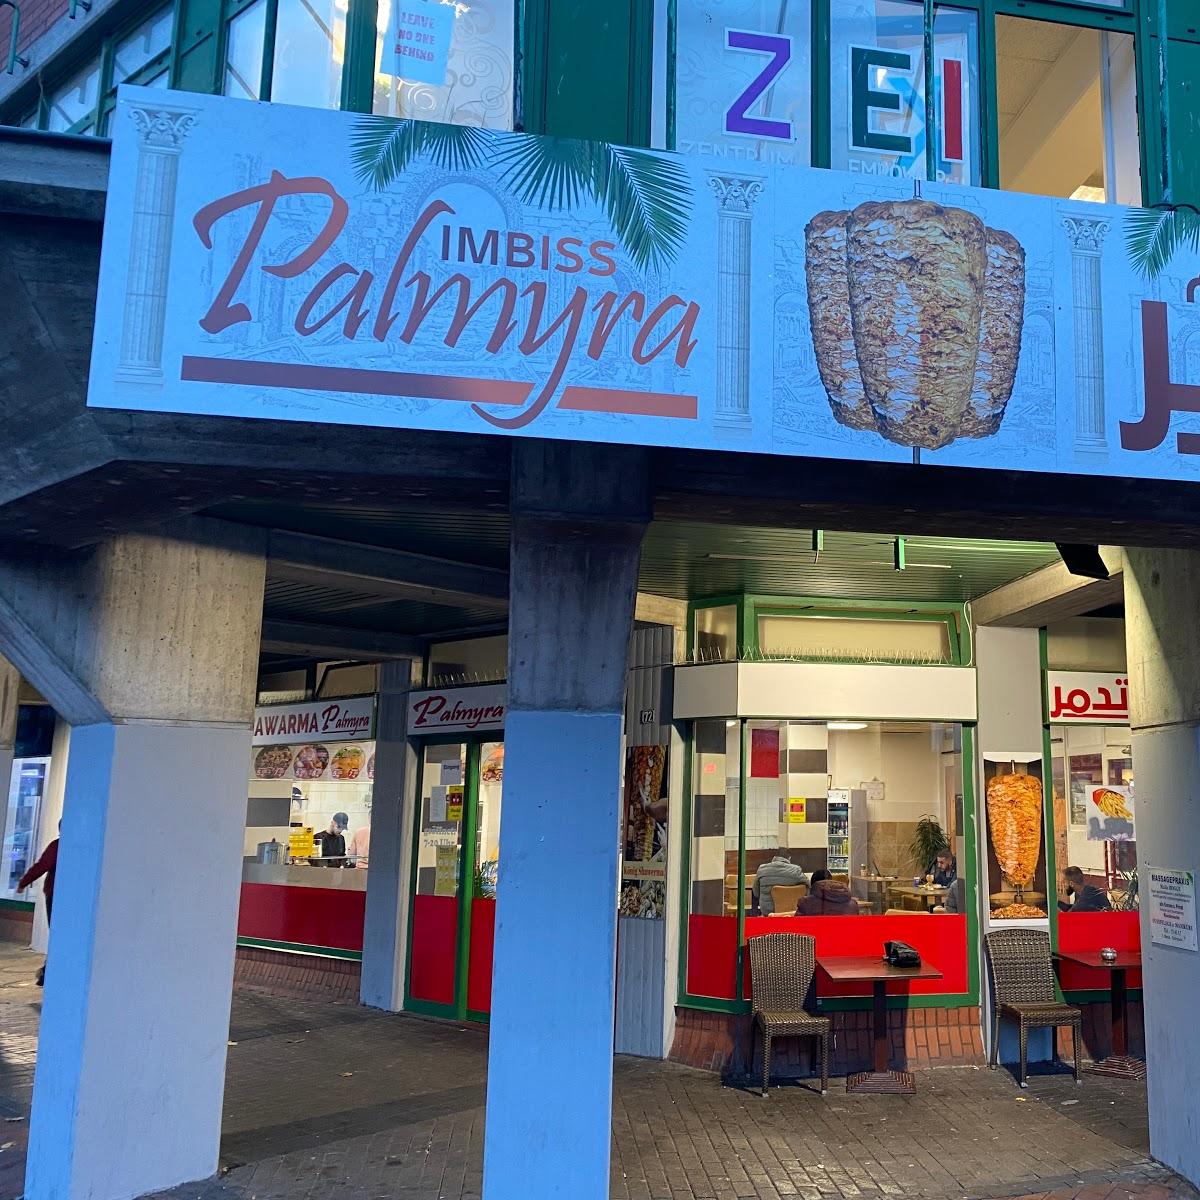 Restaurant "Palmyra Imbiss" in Kiel